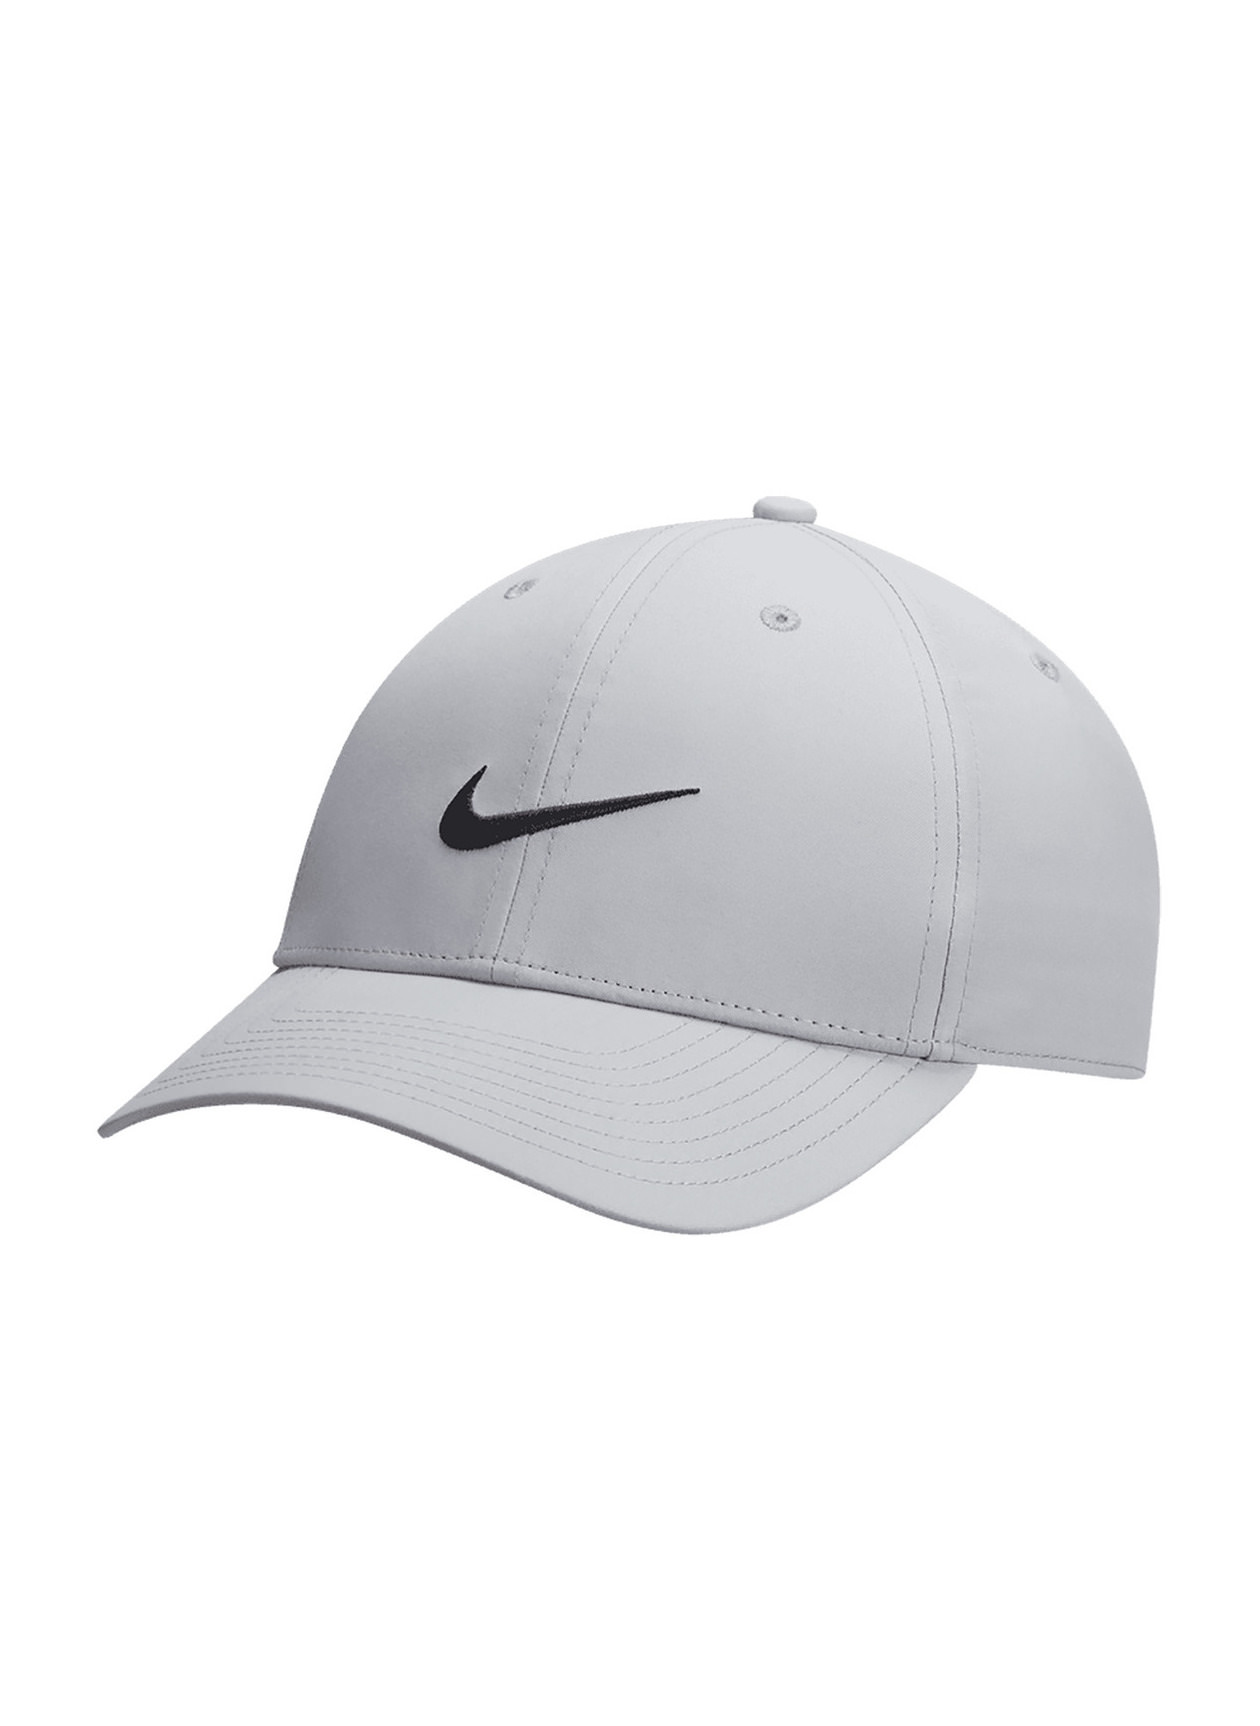 Nike Legacy 91 Performance Golf Cap Adjustable Red/White